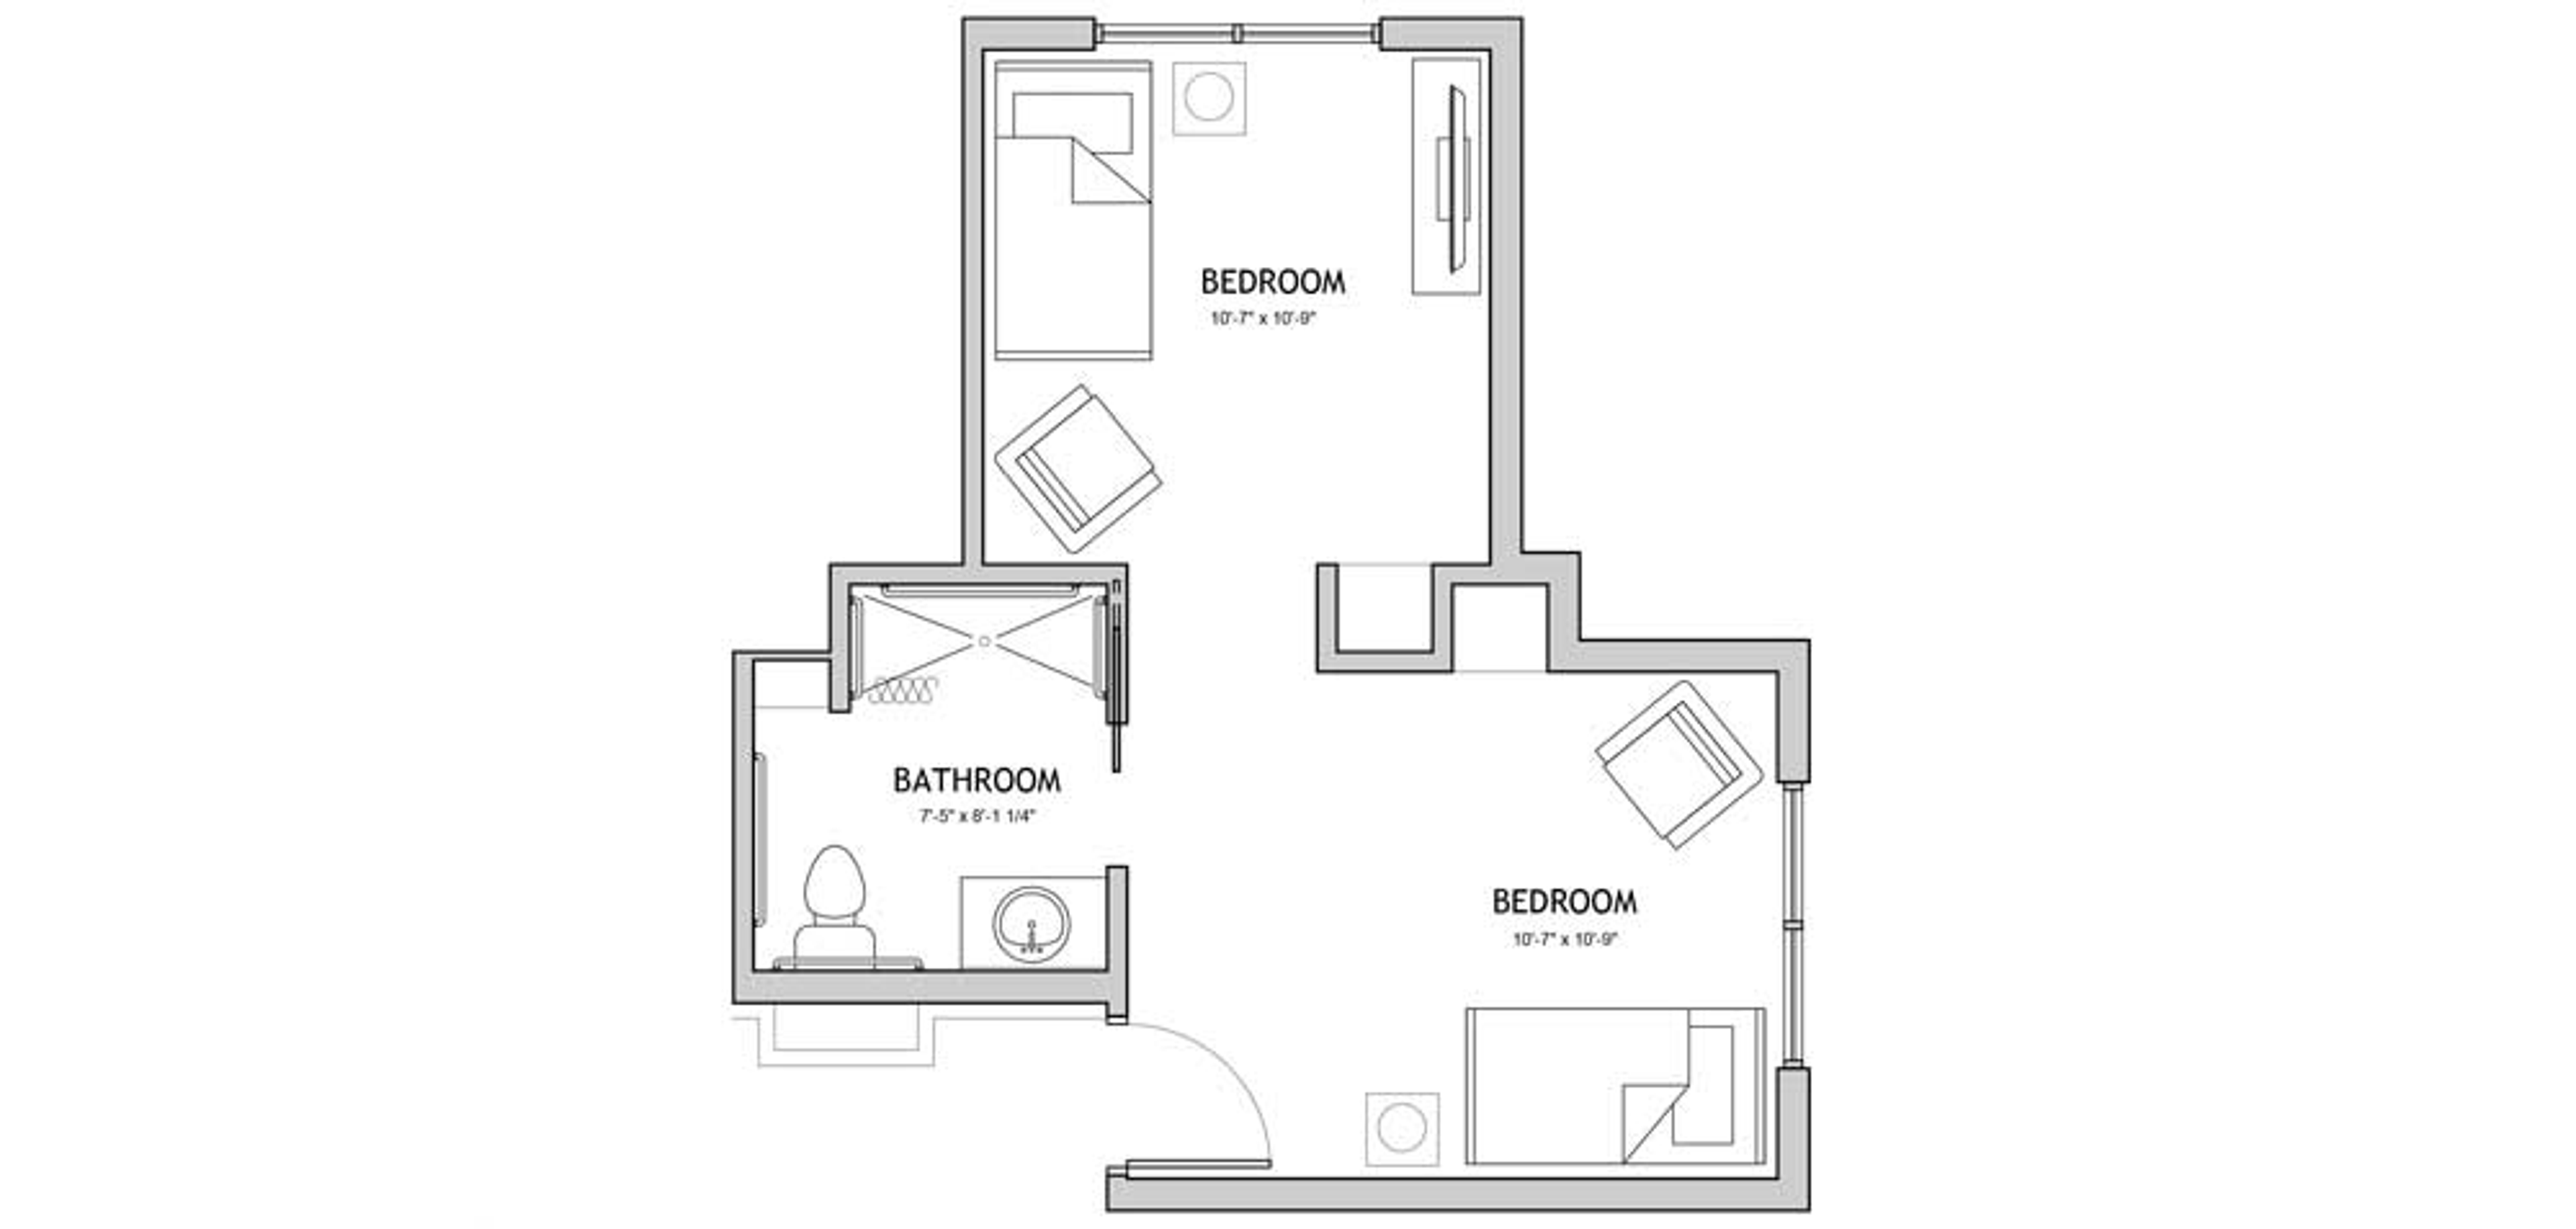 Floorplan - The Auberge at Onion Creek - 2 bed, 1 bath, 378 sq. ft. Memory Care